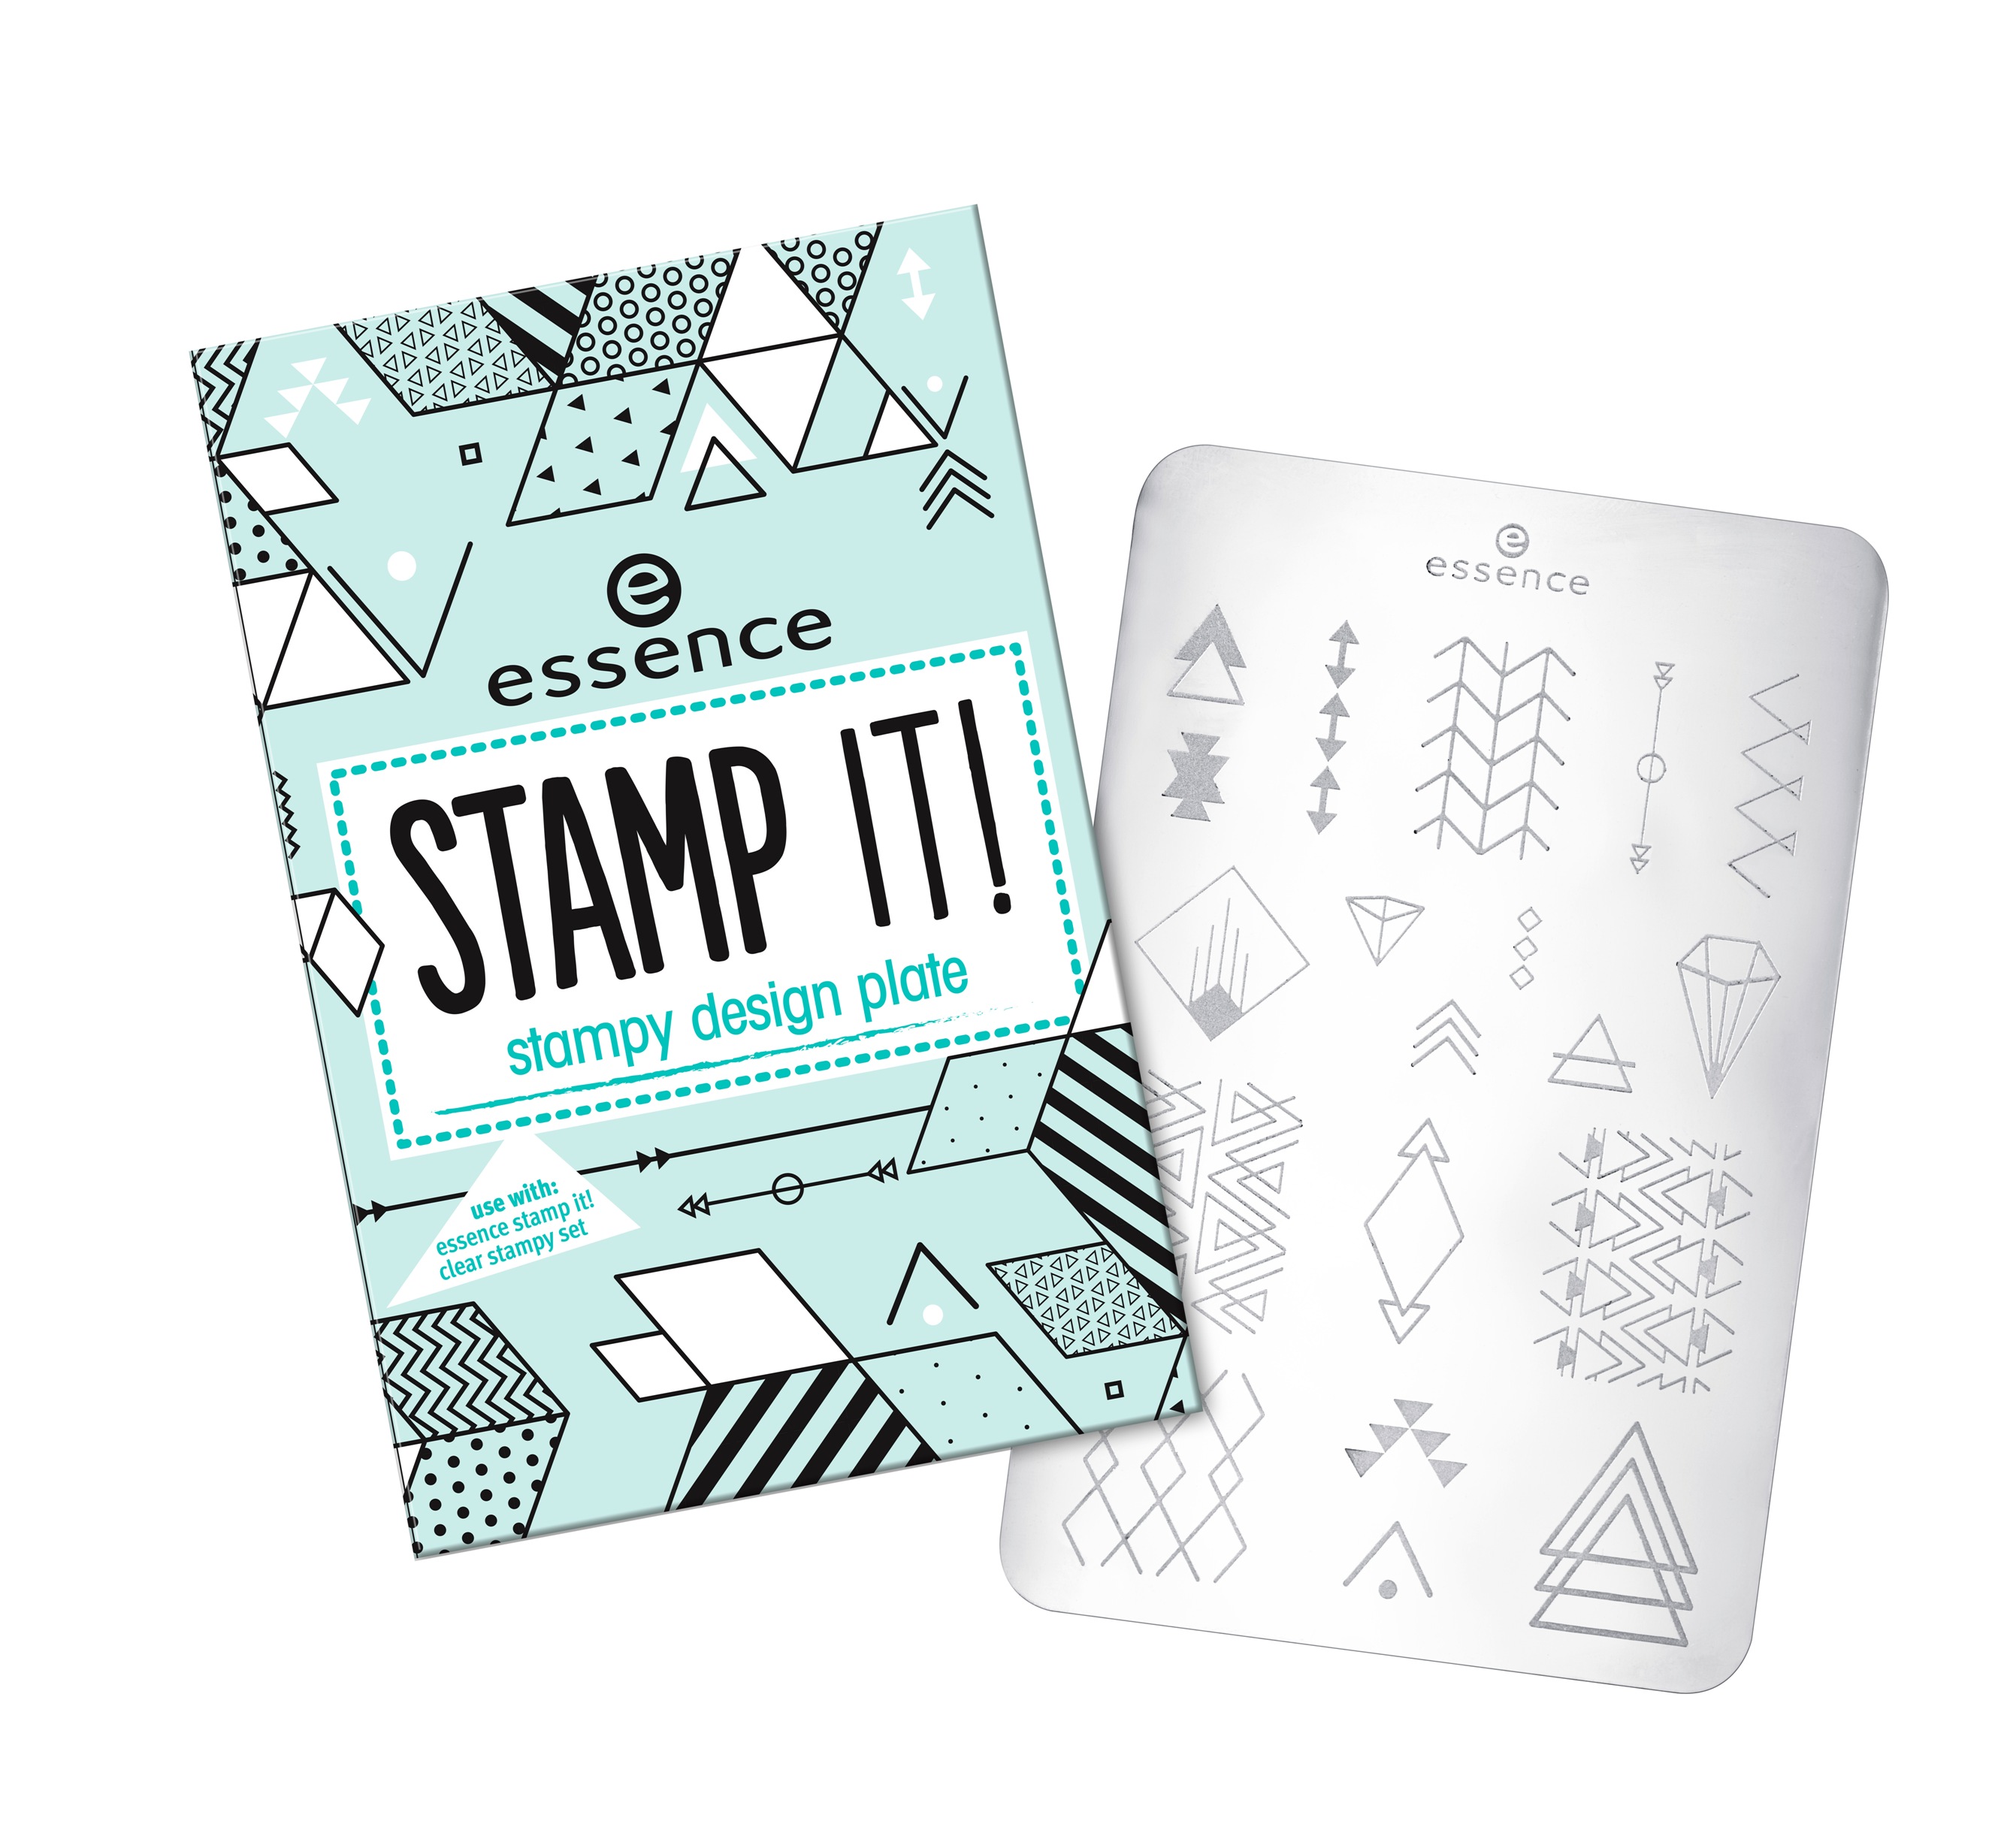 essence stamp it! stampy design plate 02